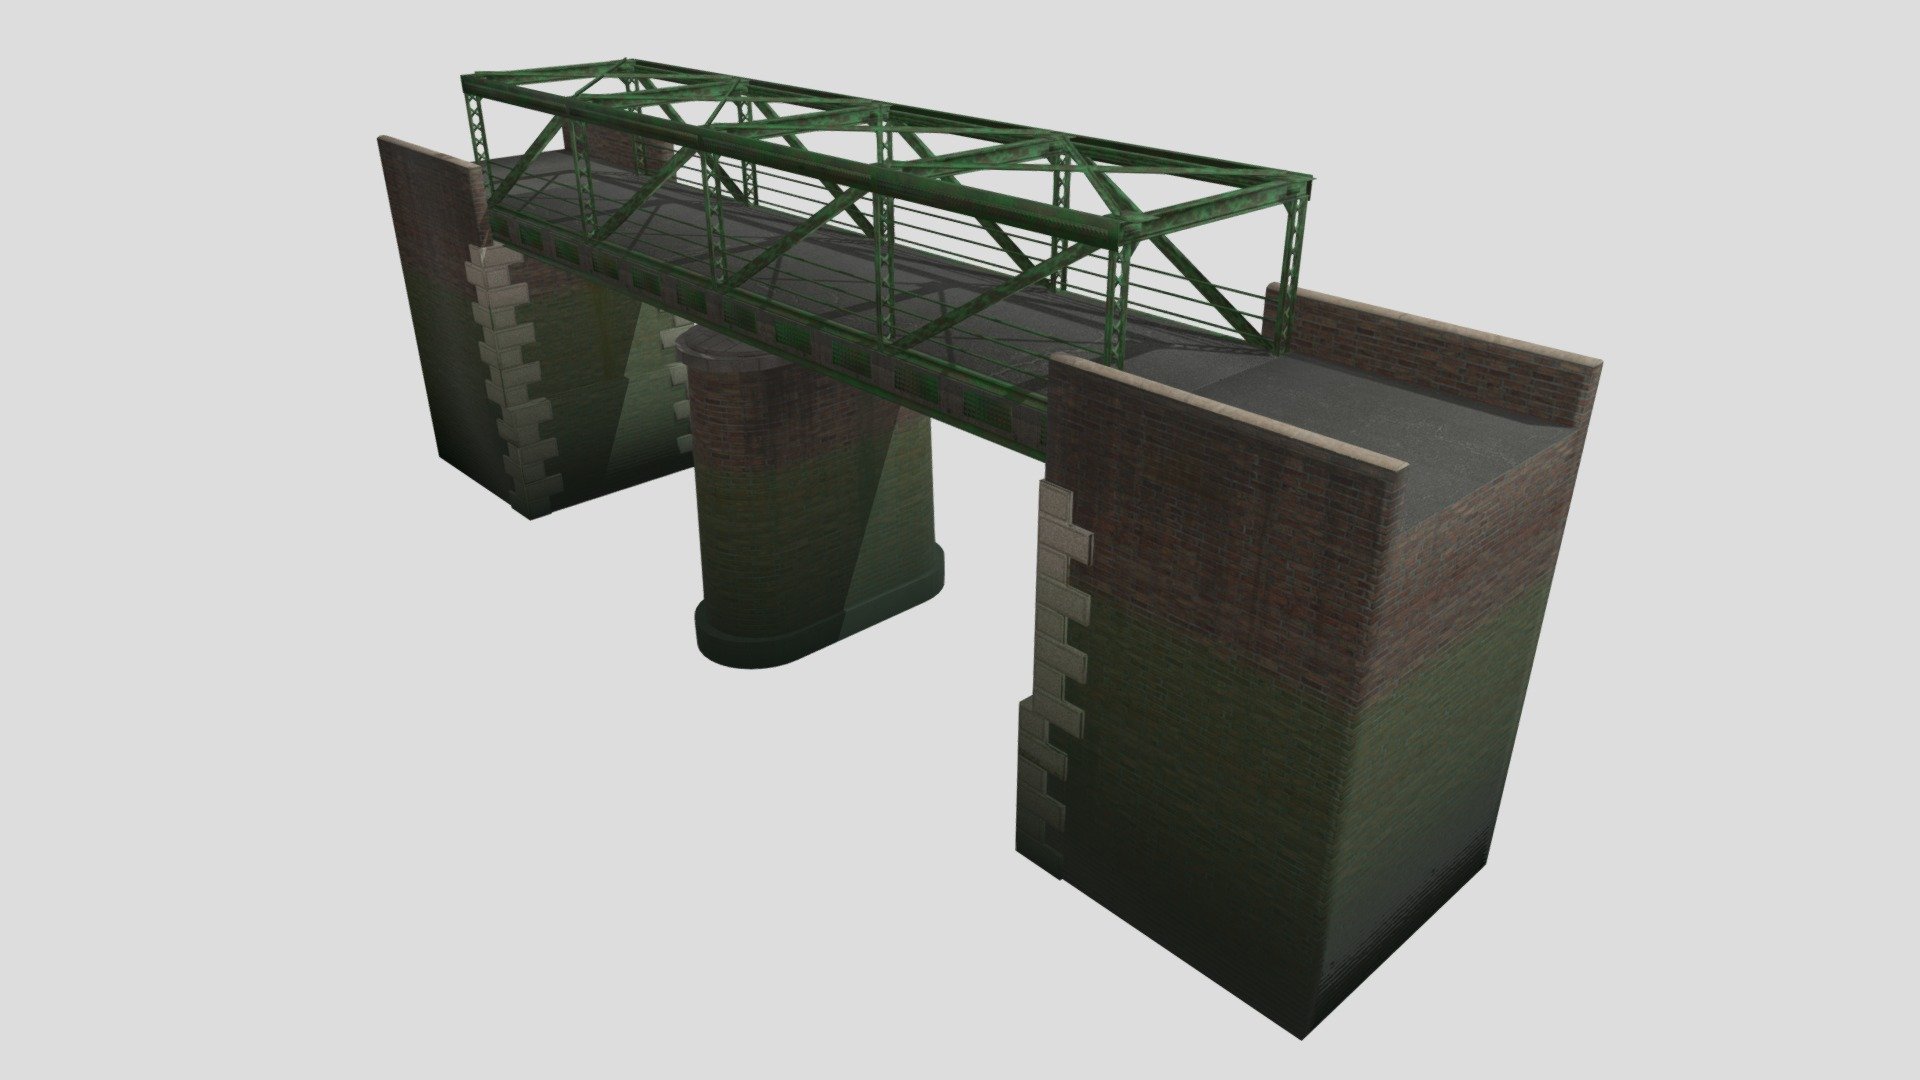 Industrial Eiffel style bridge